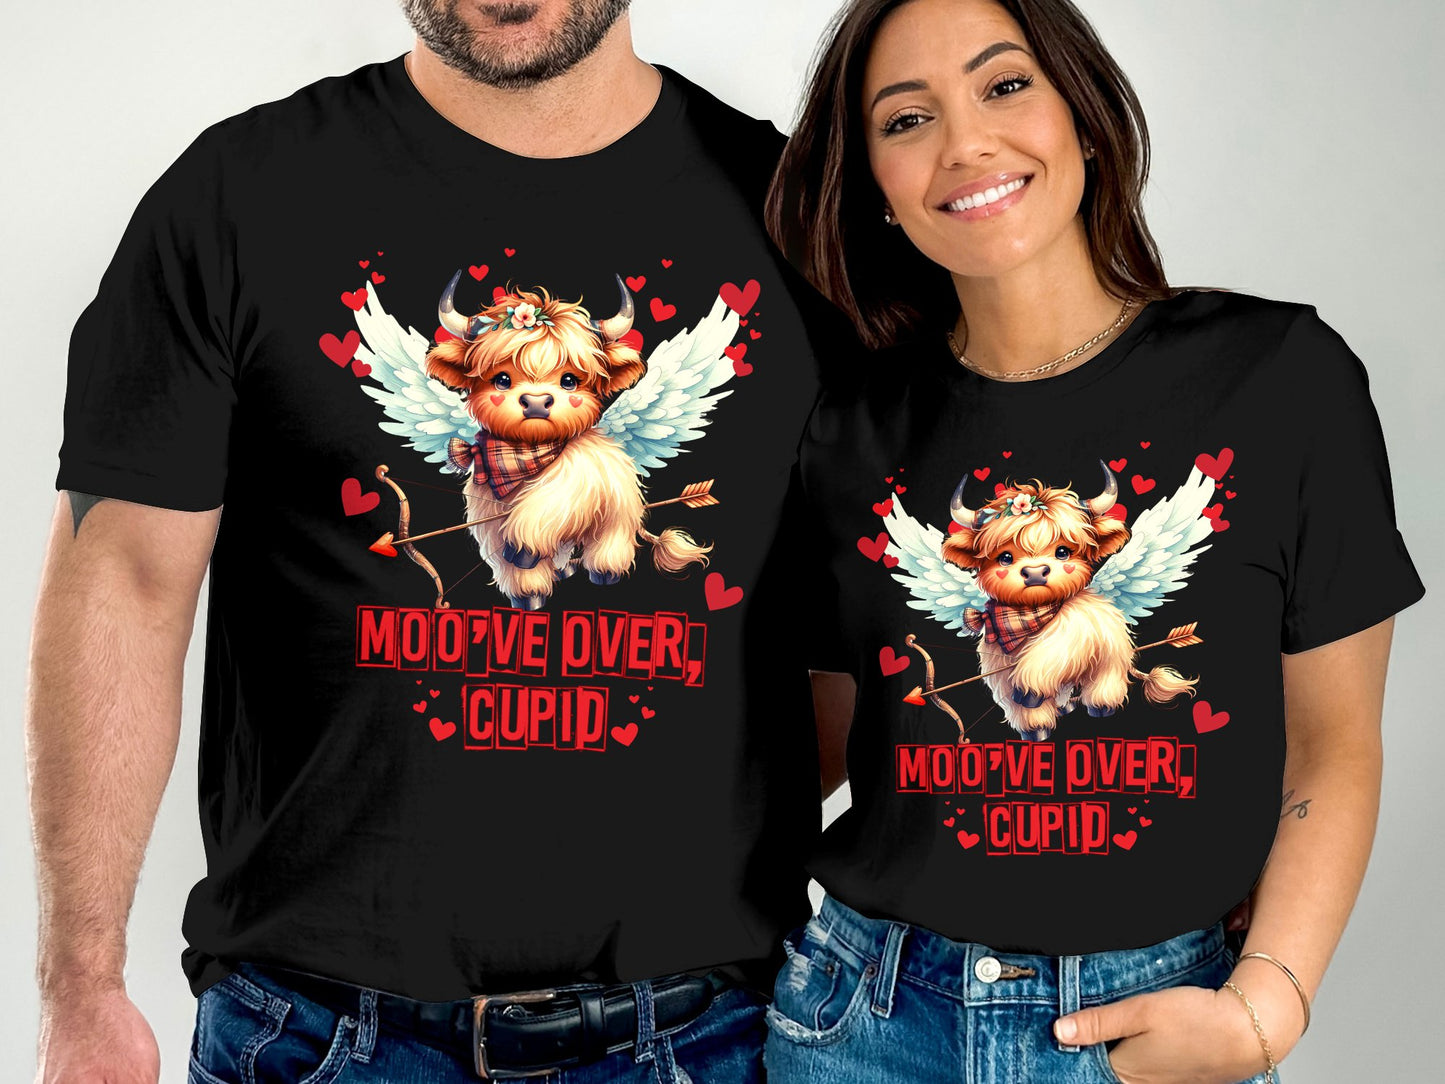 Moo've over Cupid (Valentine T-shirt)